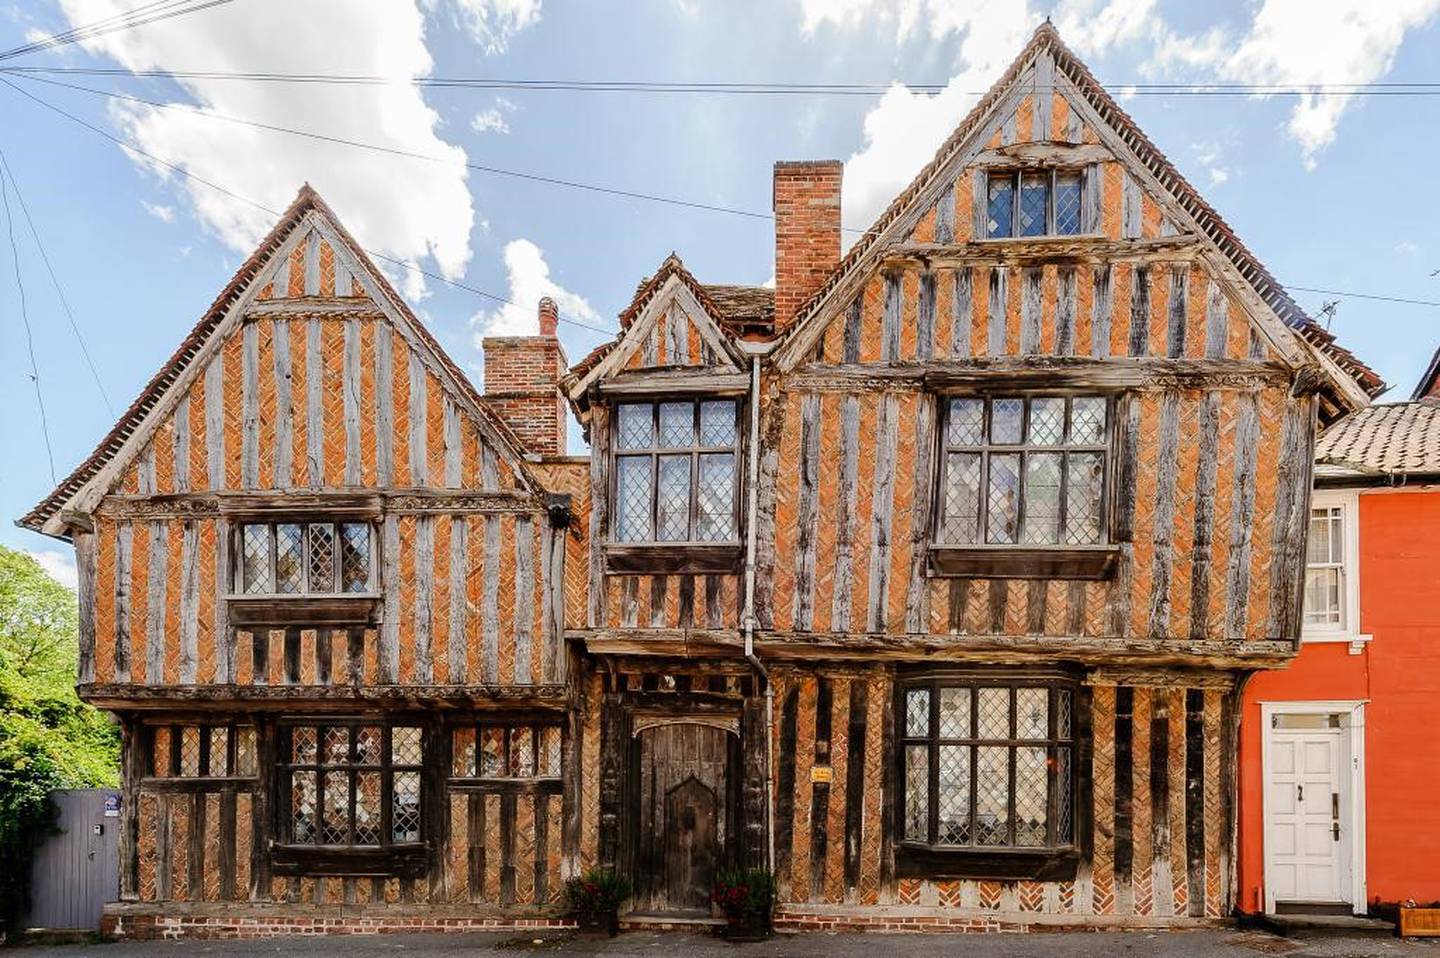 De Vere House is the real-life home where Harry Potter was born. Photo: De Vere House